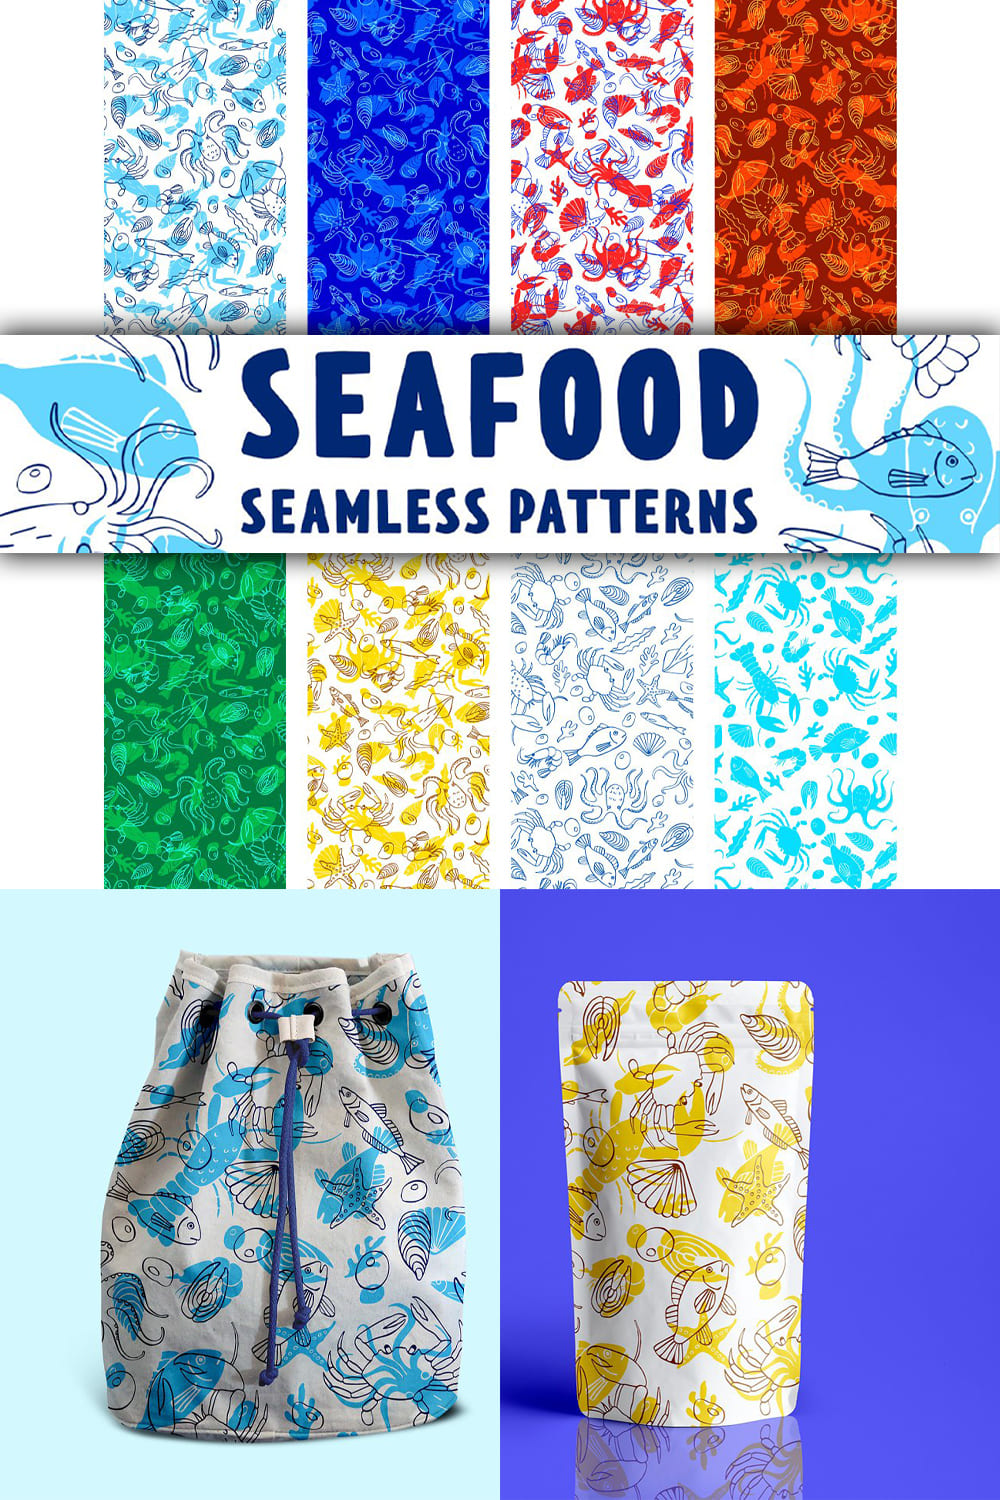 Seafood Patterns pinterest image.